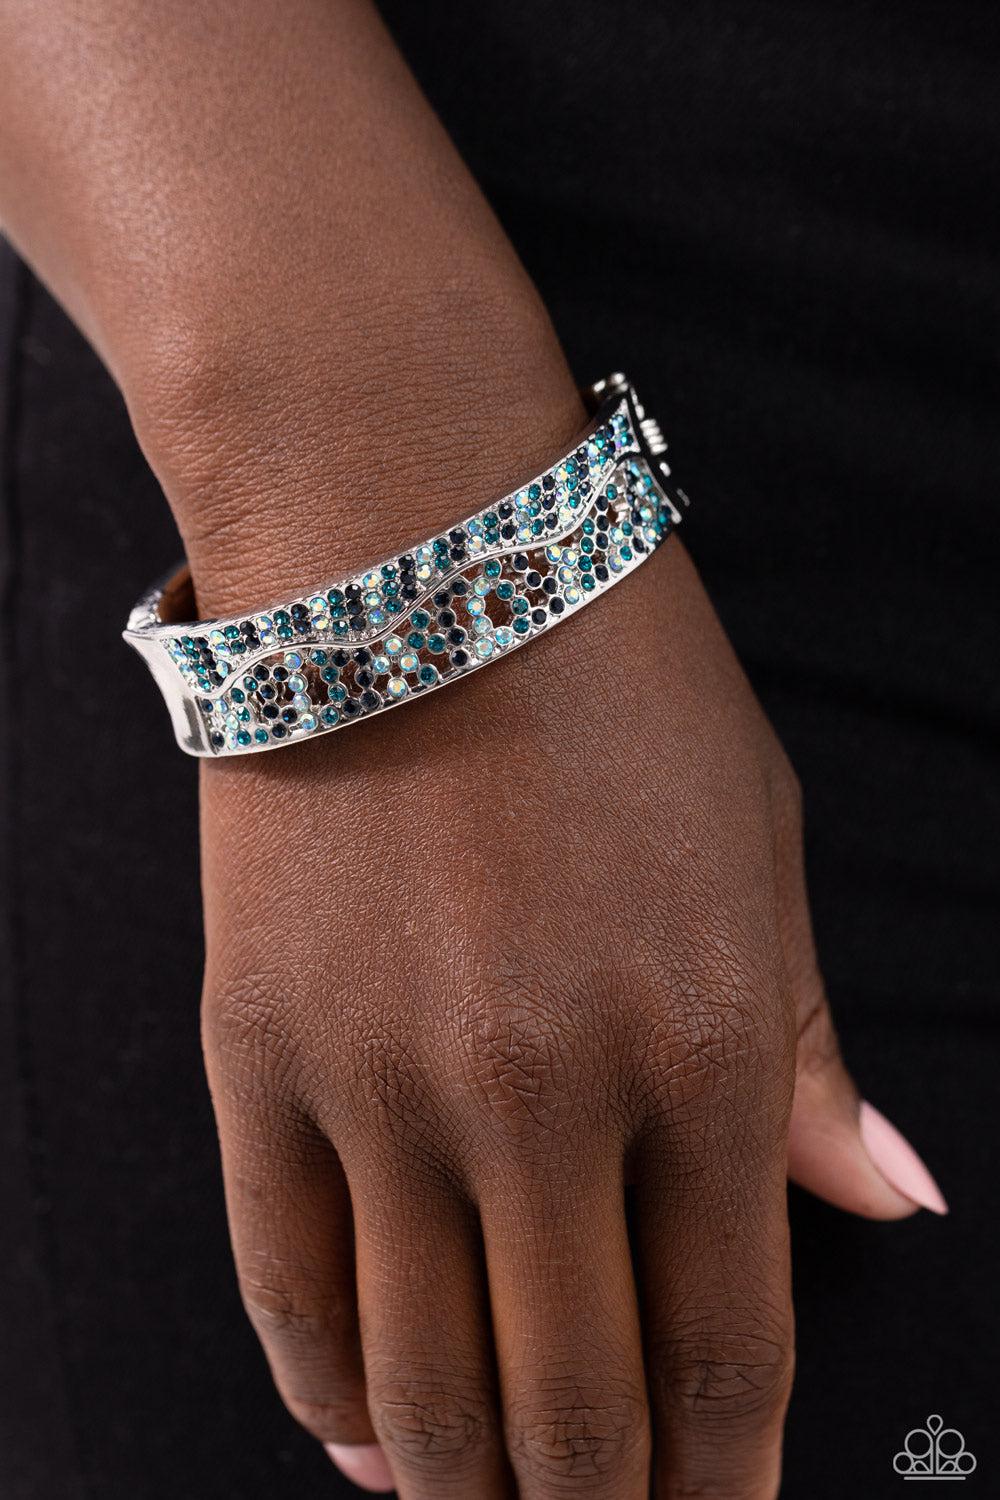 Wavy Whimsy Blue Rhinestone Bracelet - Paparazzi Accessories- lightbox - CarasShop.com - $5 Jewelry by Cara Jewels